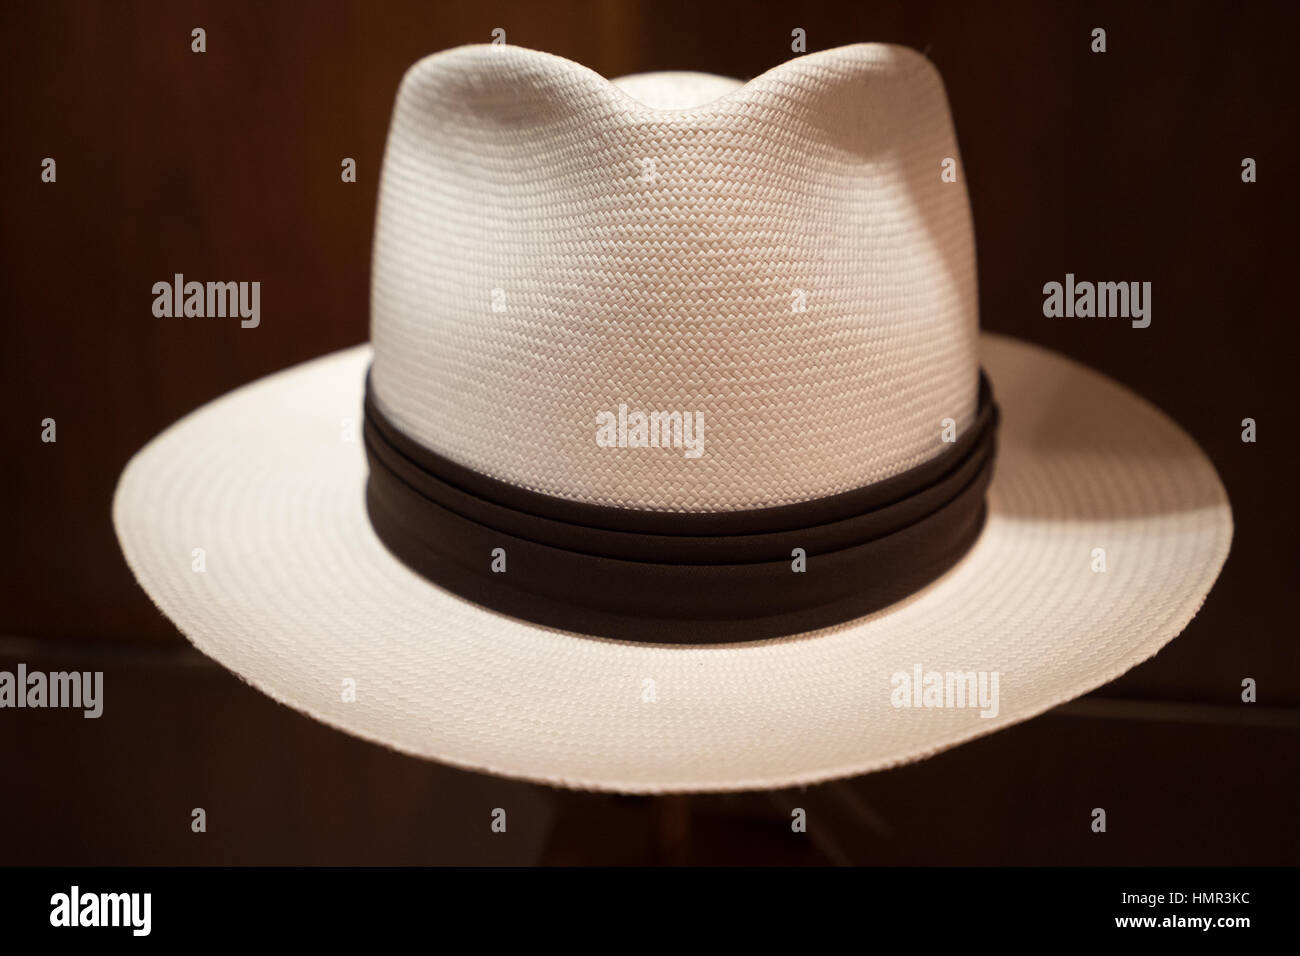 men's panama hat closeup details in Cuenca Ecuador Stock Photo